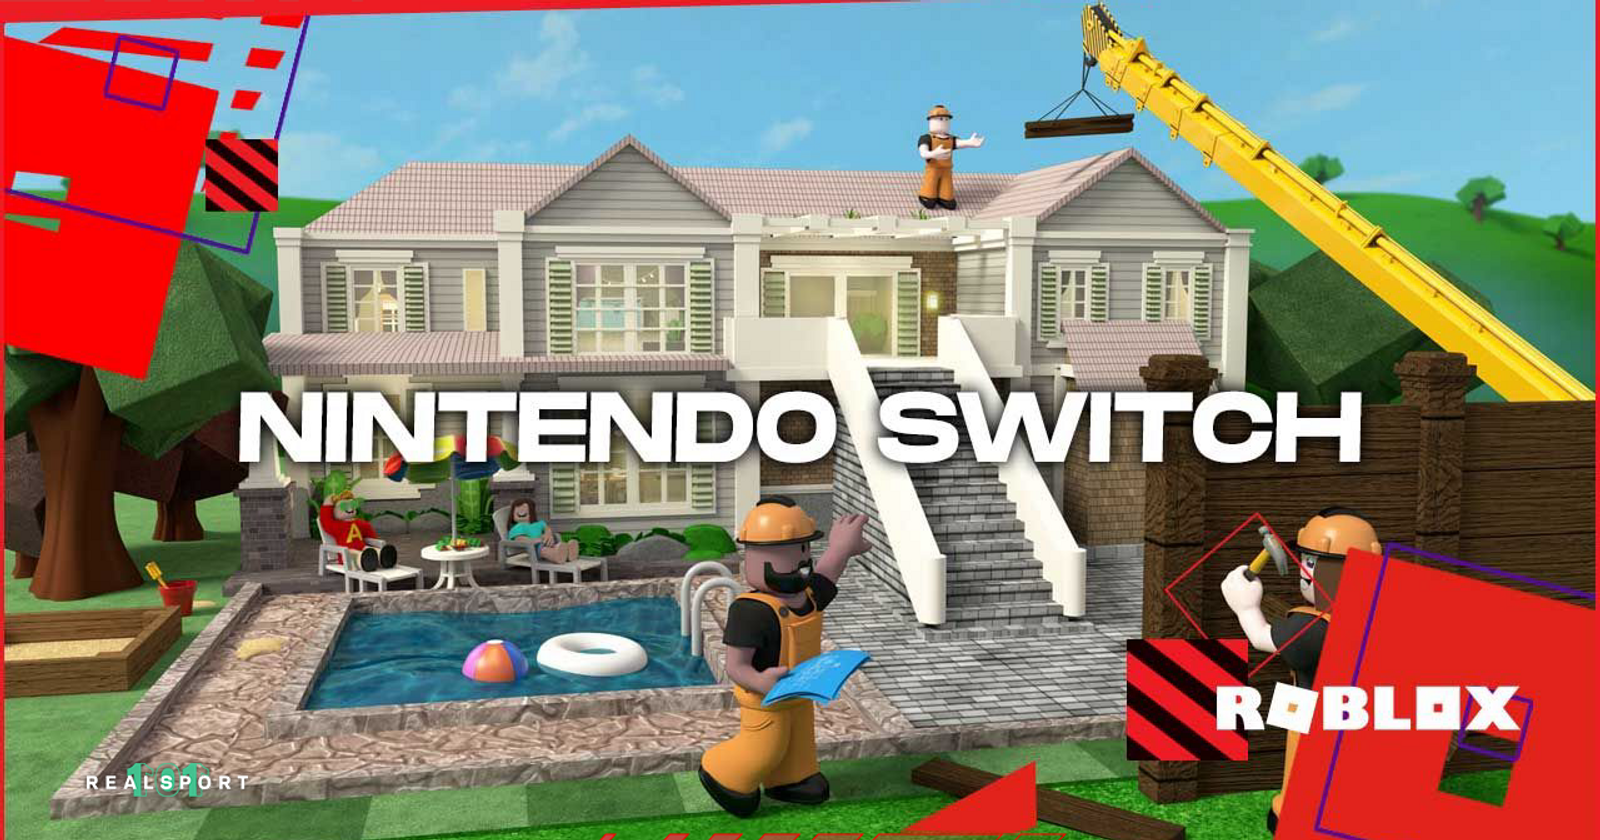 Roblox On Nintendo Switch 